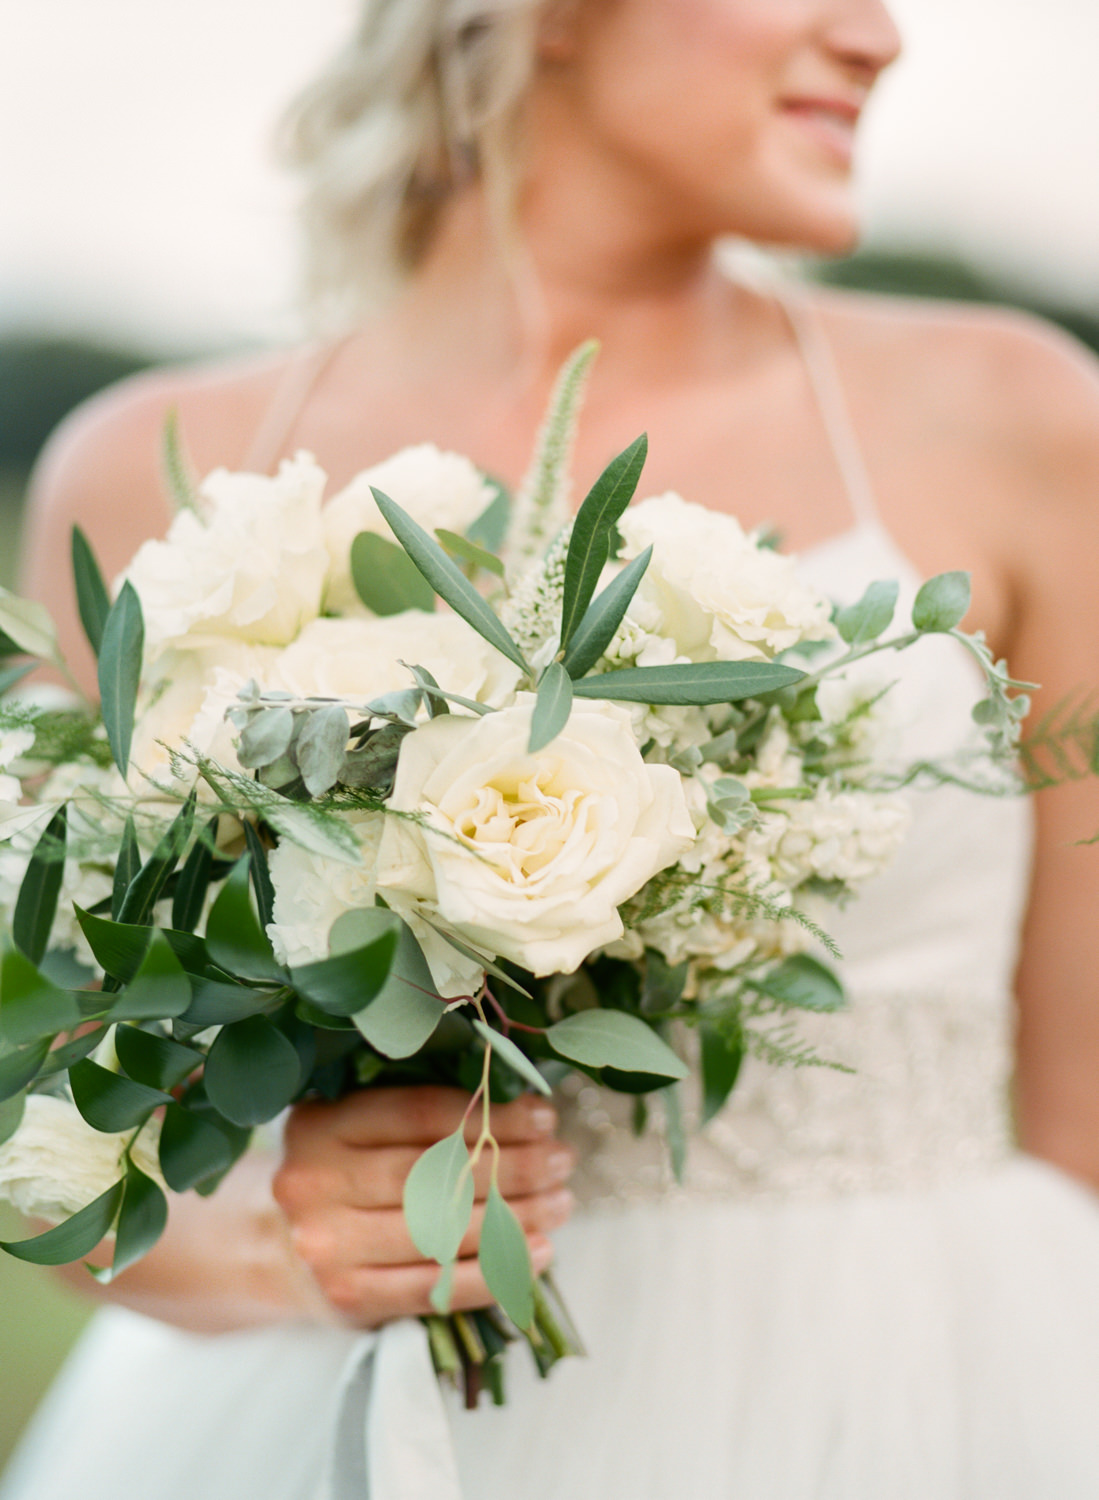 He Loves Me Flowers, St. Louis fine art bridal session, Erica Robnett Photography